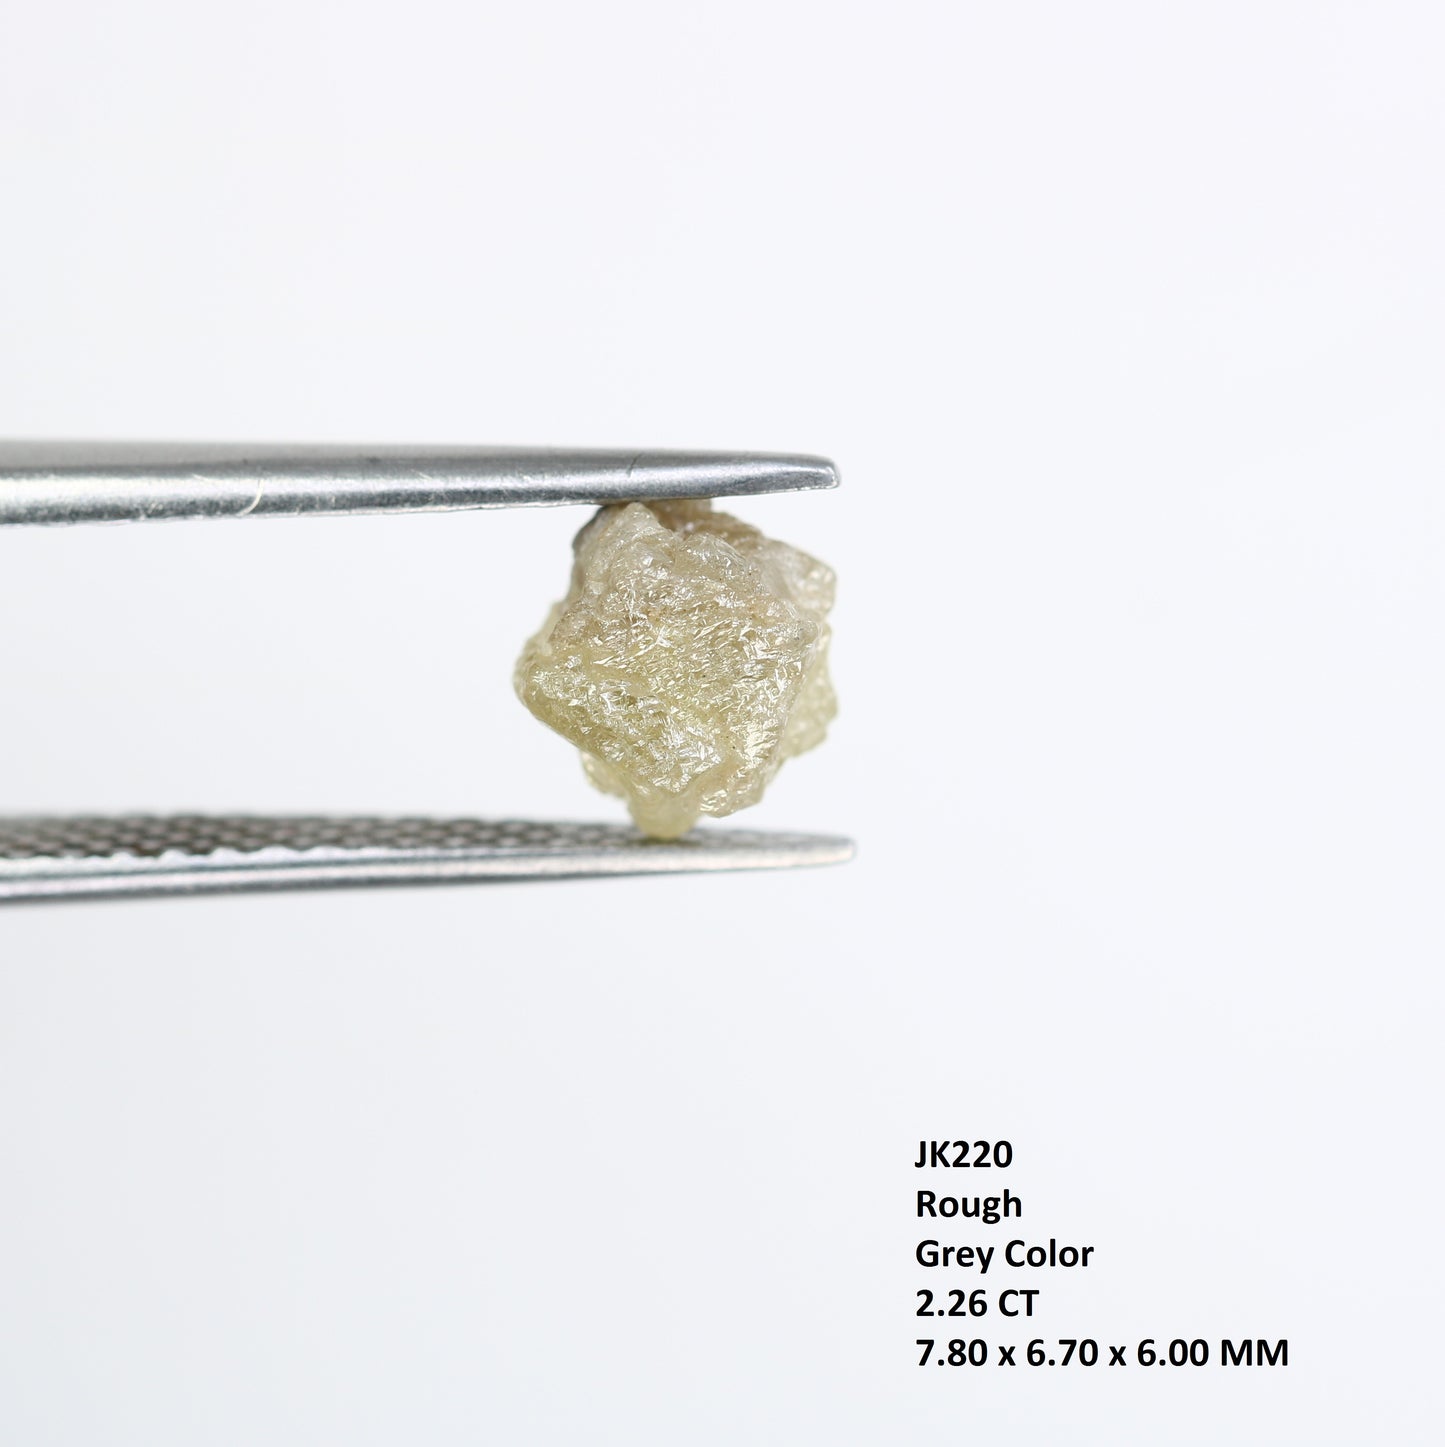 2.26 CT Grey Raw Rough Irregular Cut Diamond For Engagement Ring